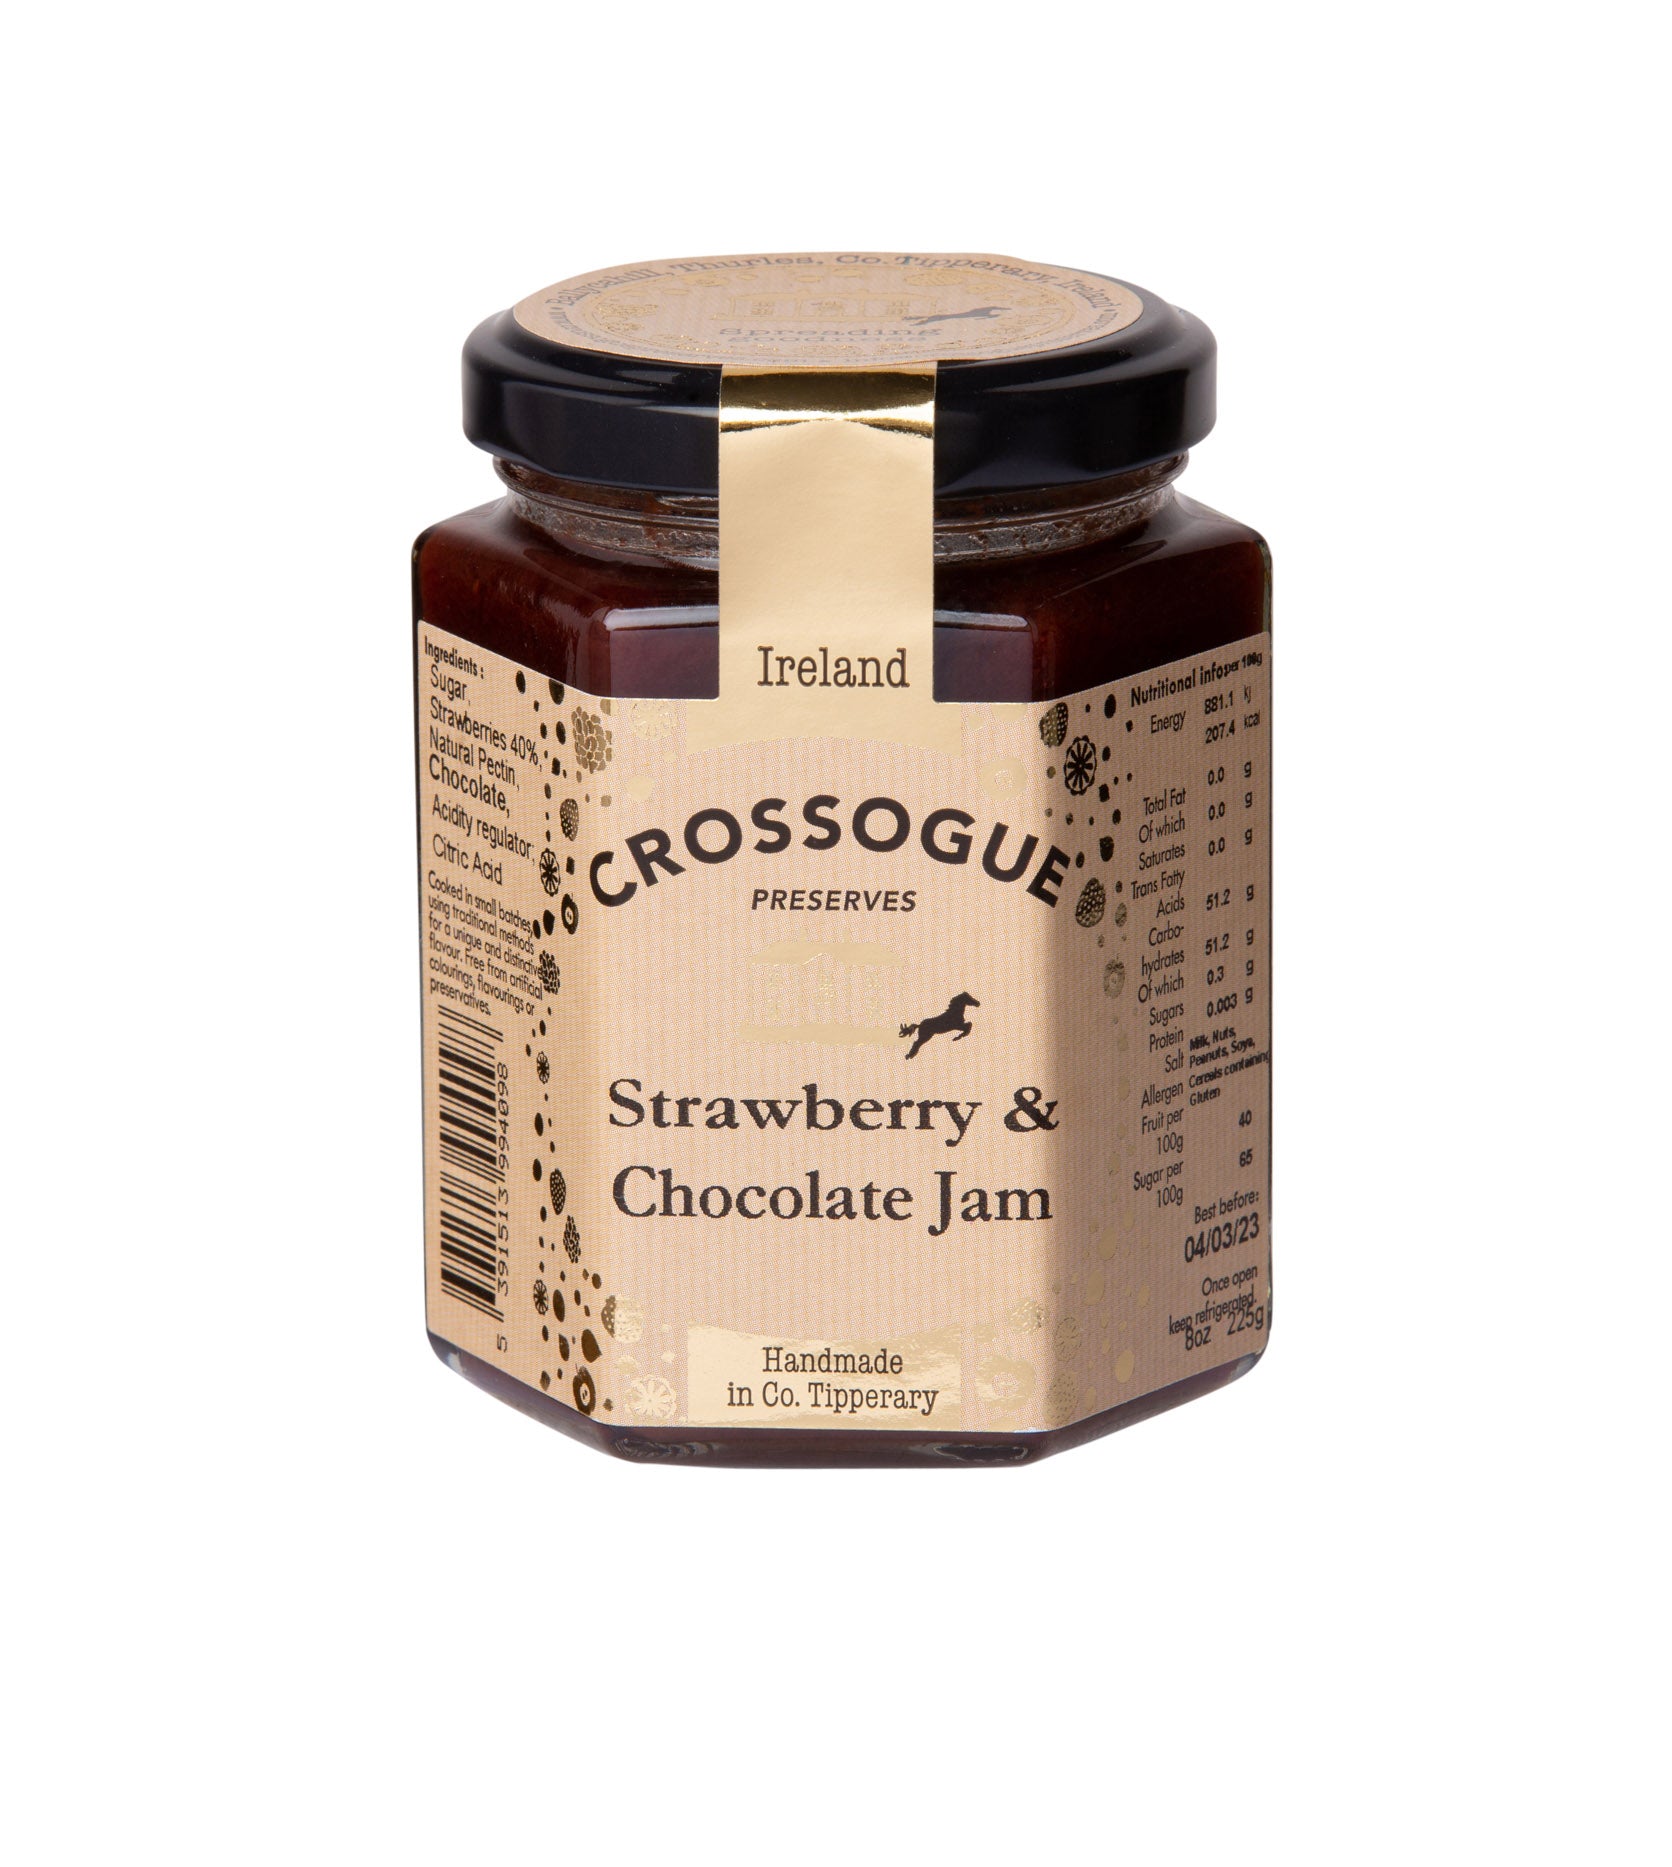 Strawberry & Chocolate Jam